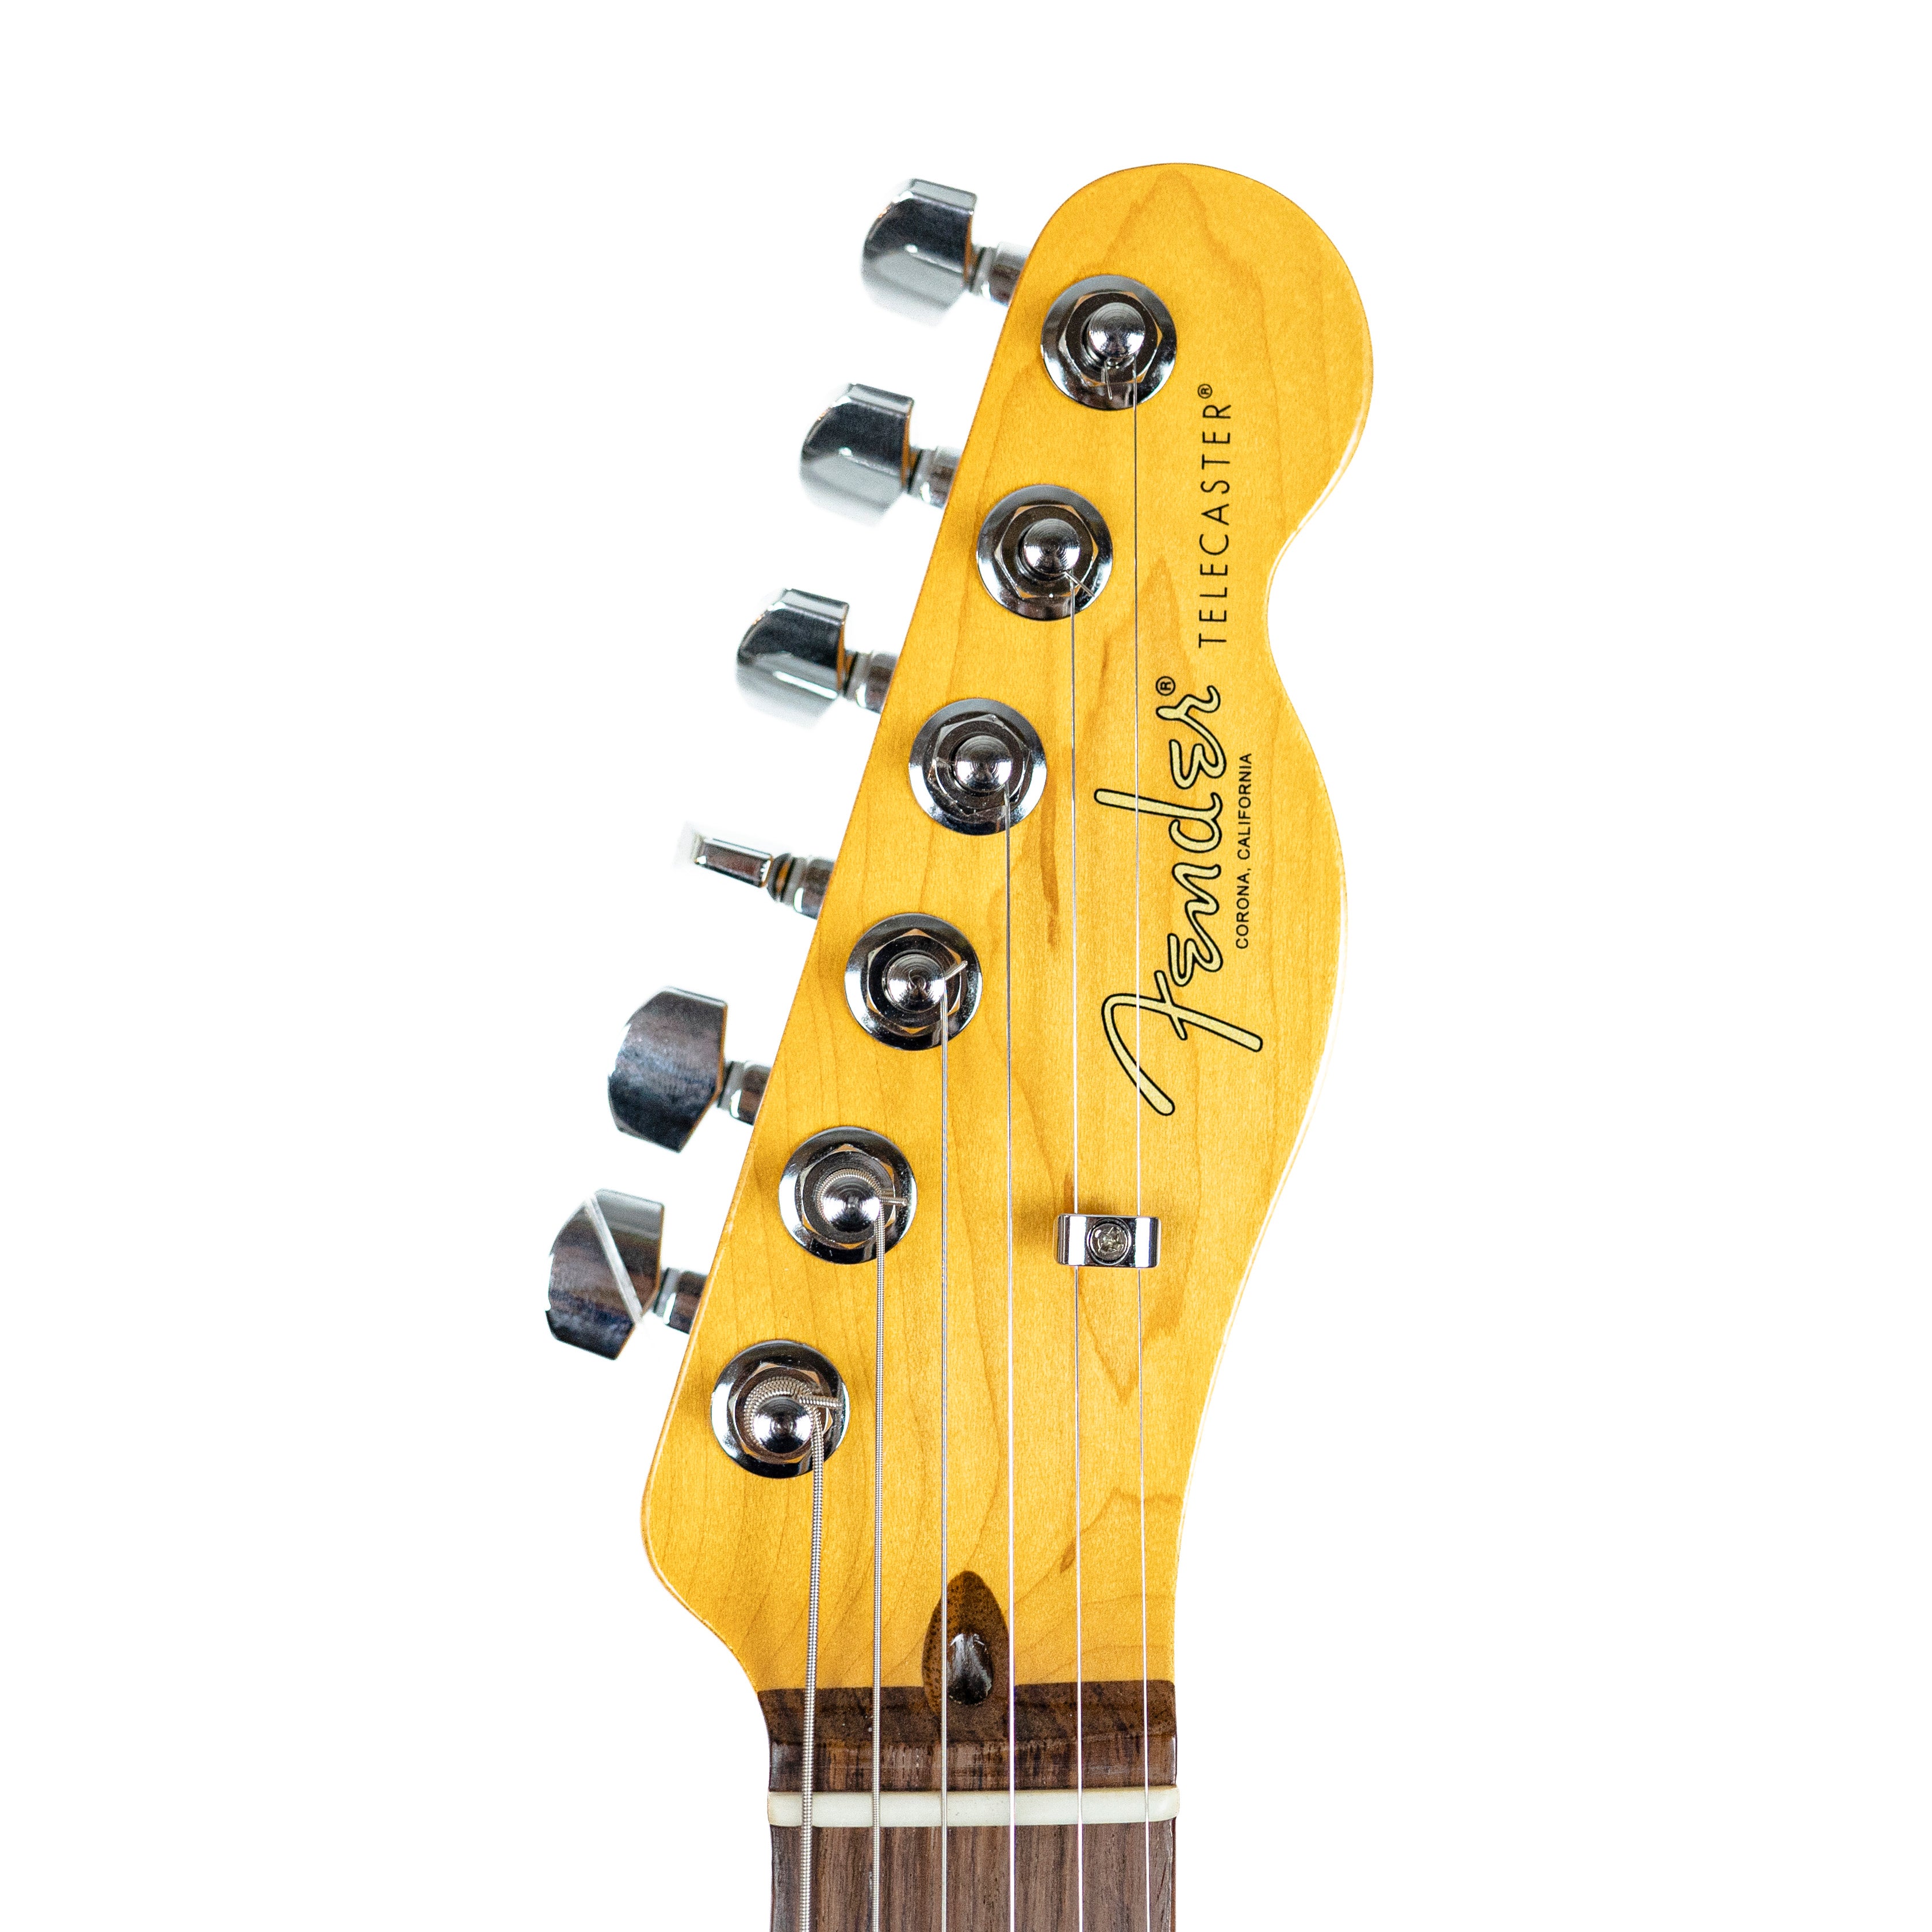 Fender 2020 American Professional II Telecaster Mercury